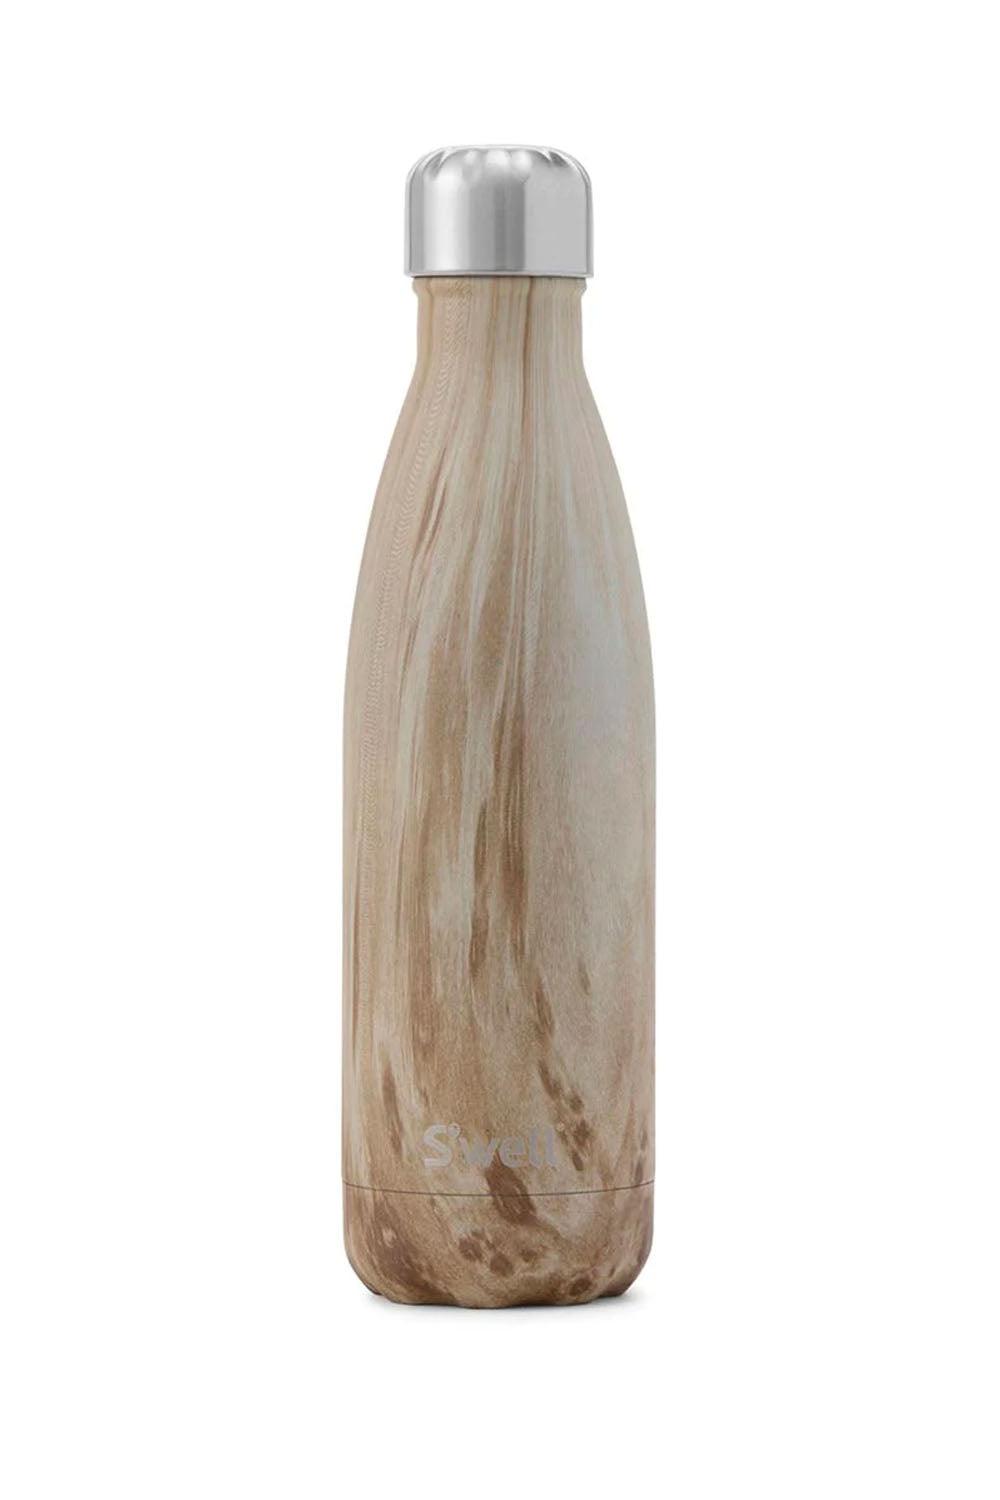 Blond wood 17 oz - 500 ml